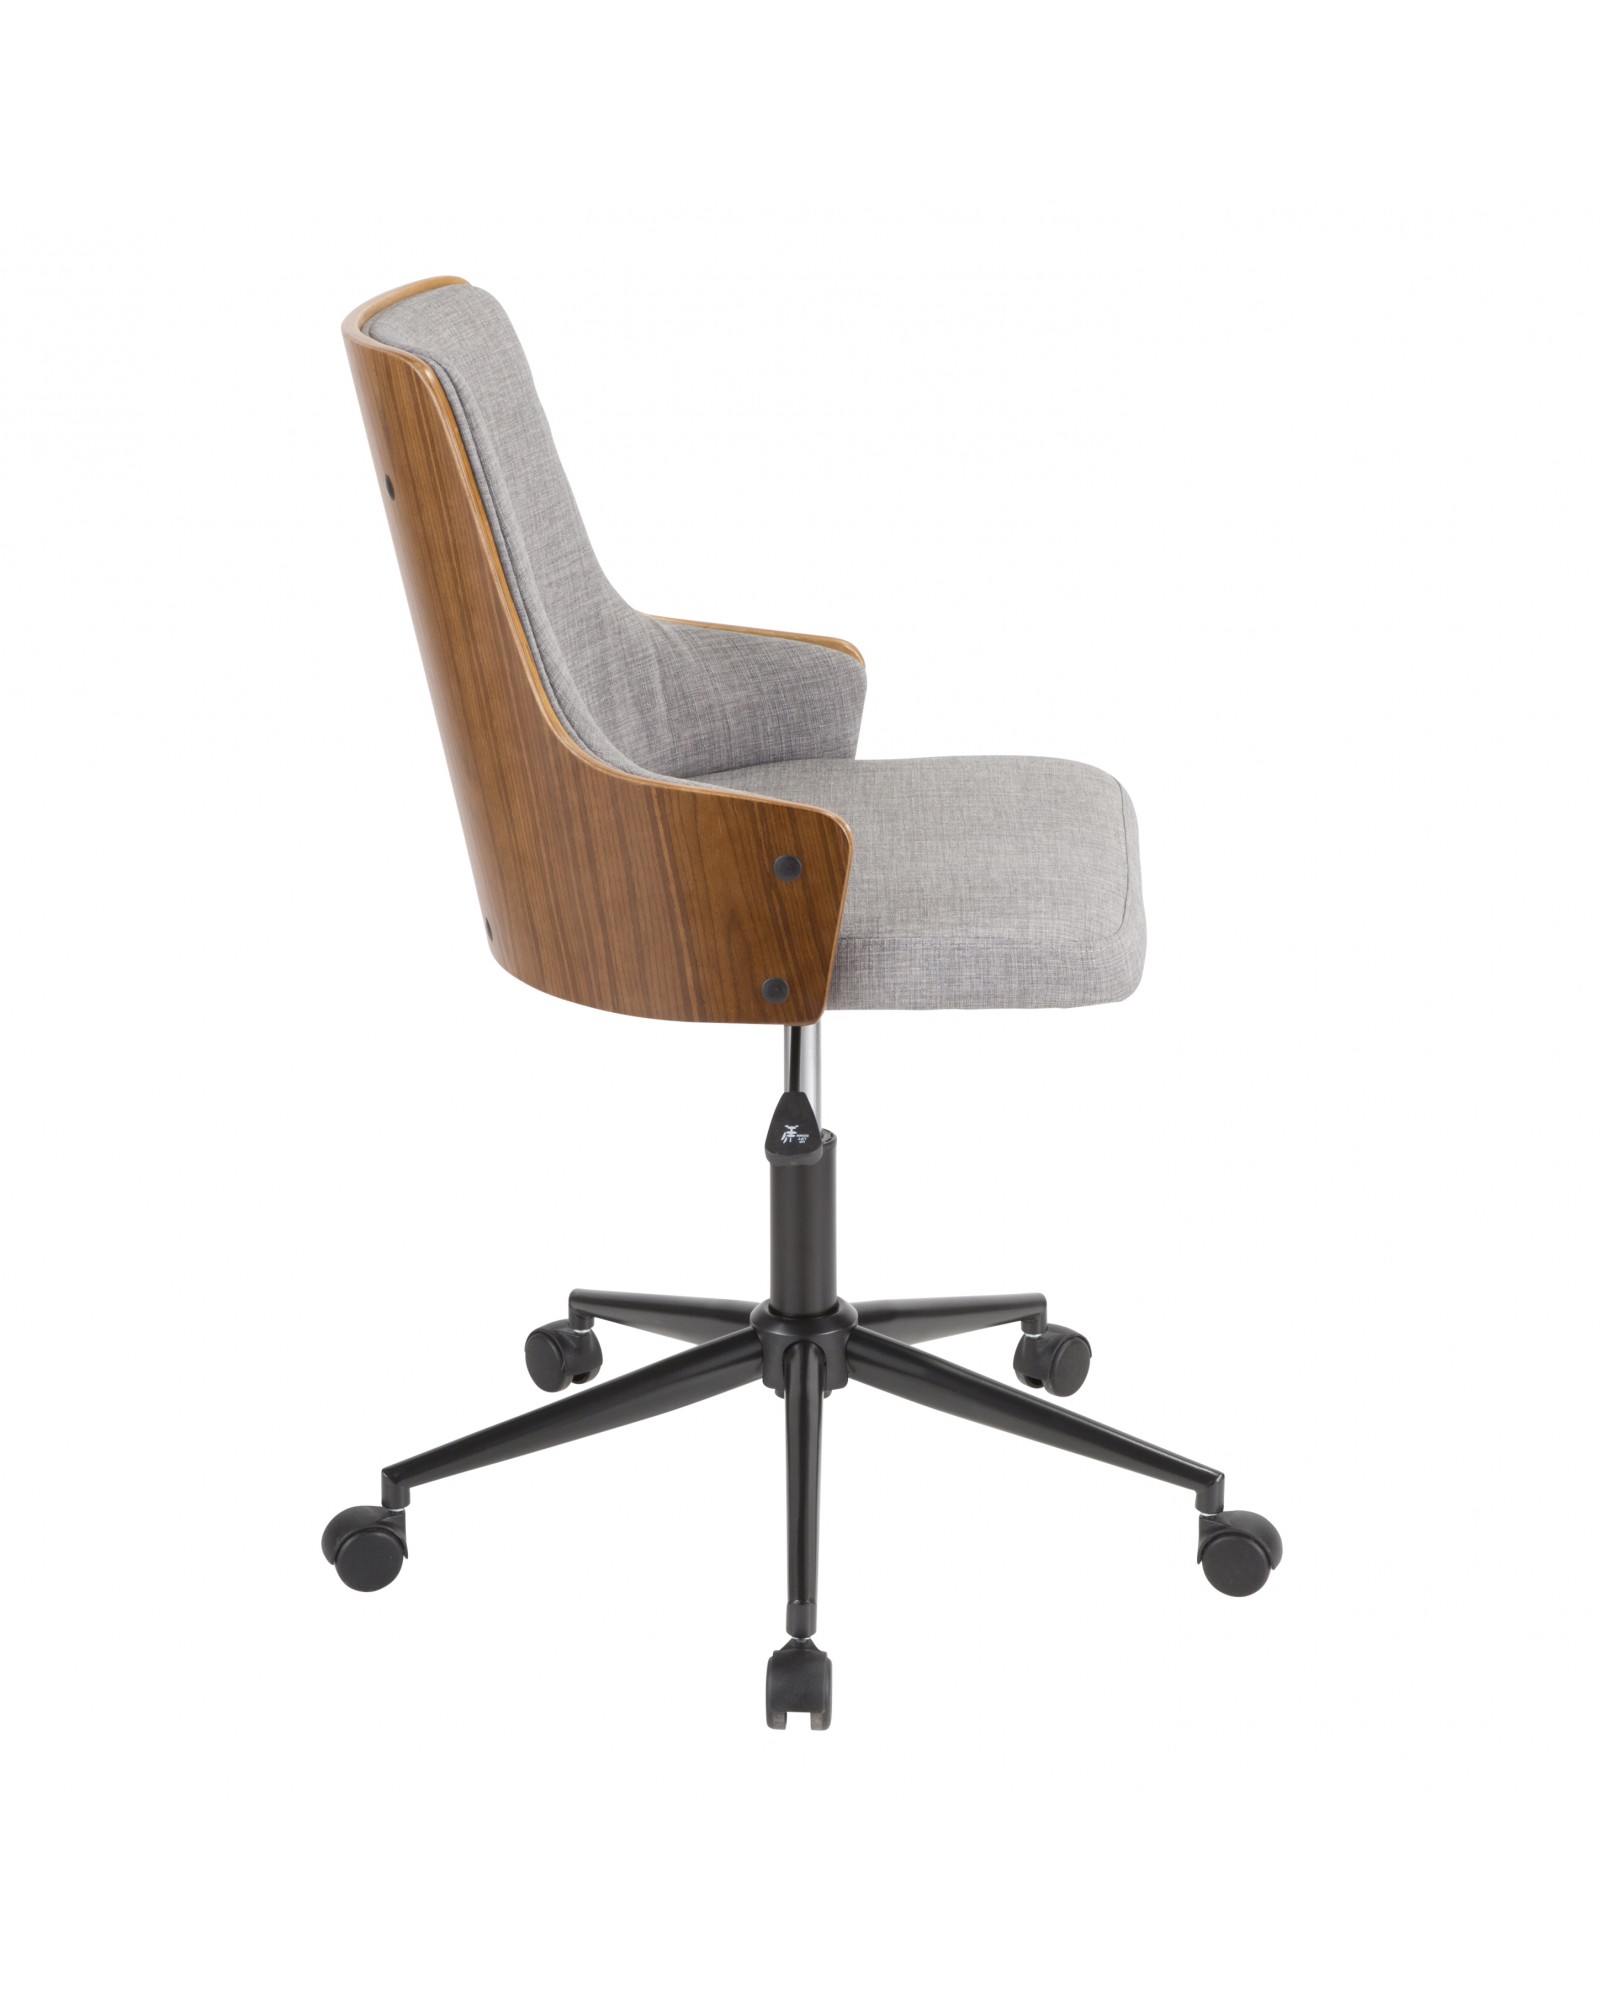 Stella Mid-Century Modern Office Chair in Walnut Wood and Grey Fabric